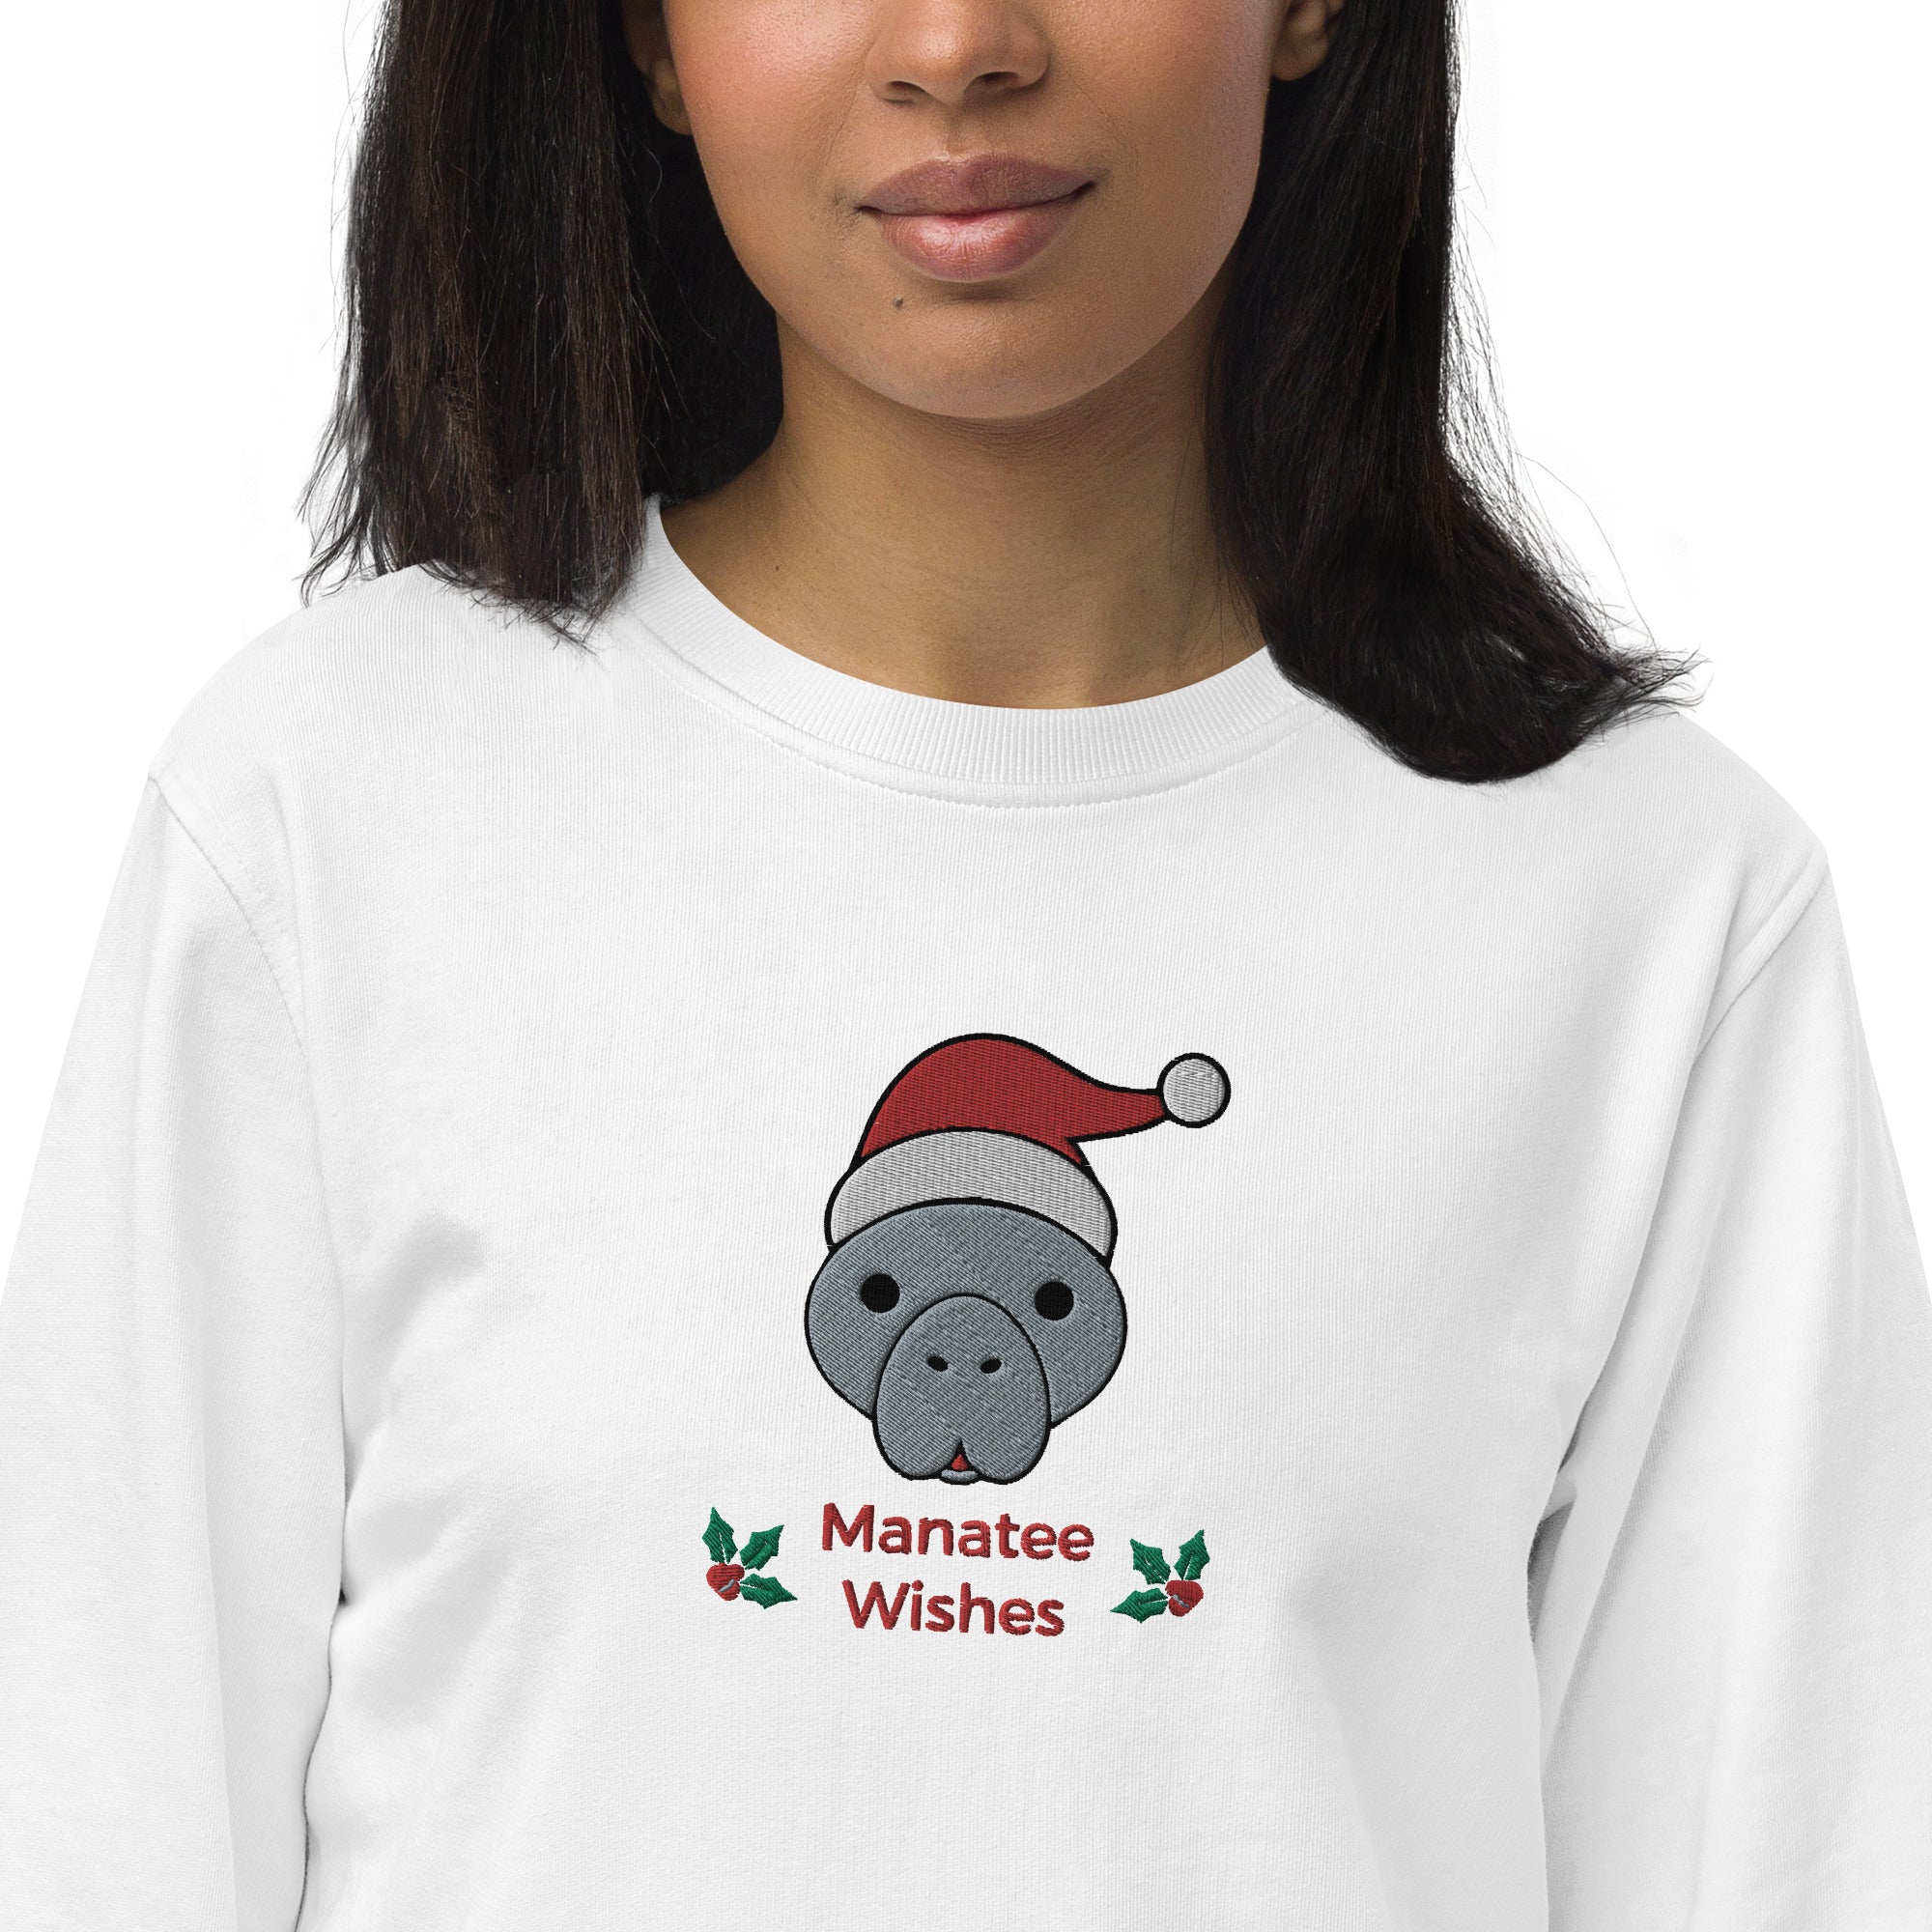 Embroidered Manatee Holiday Wishes Sustainable Christmas Sweatshirt